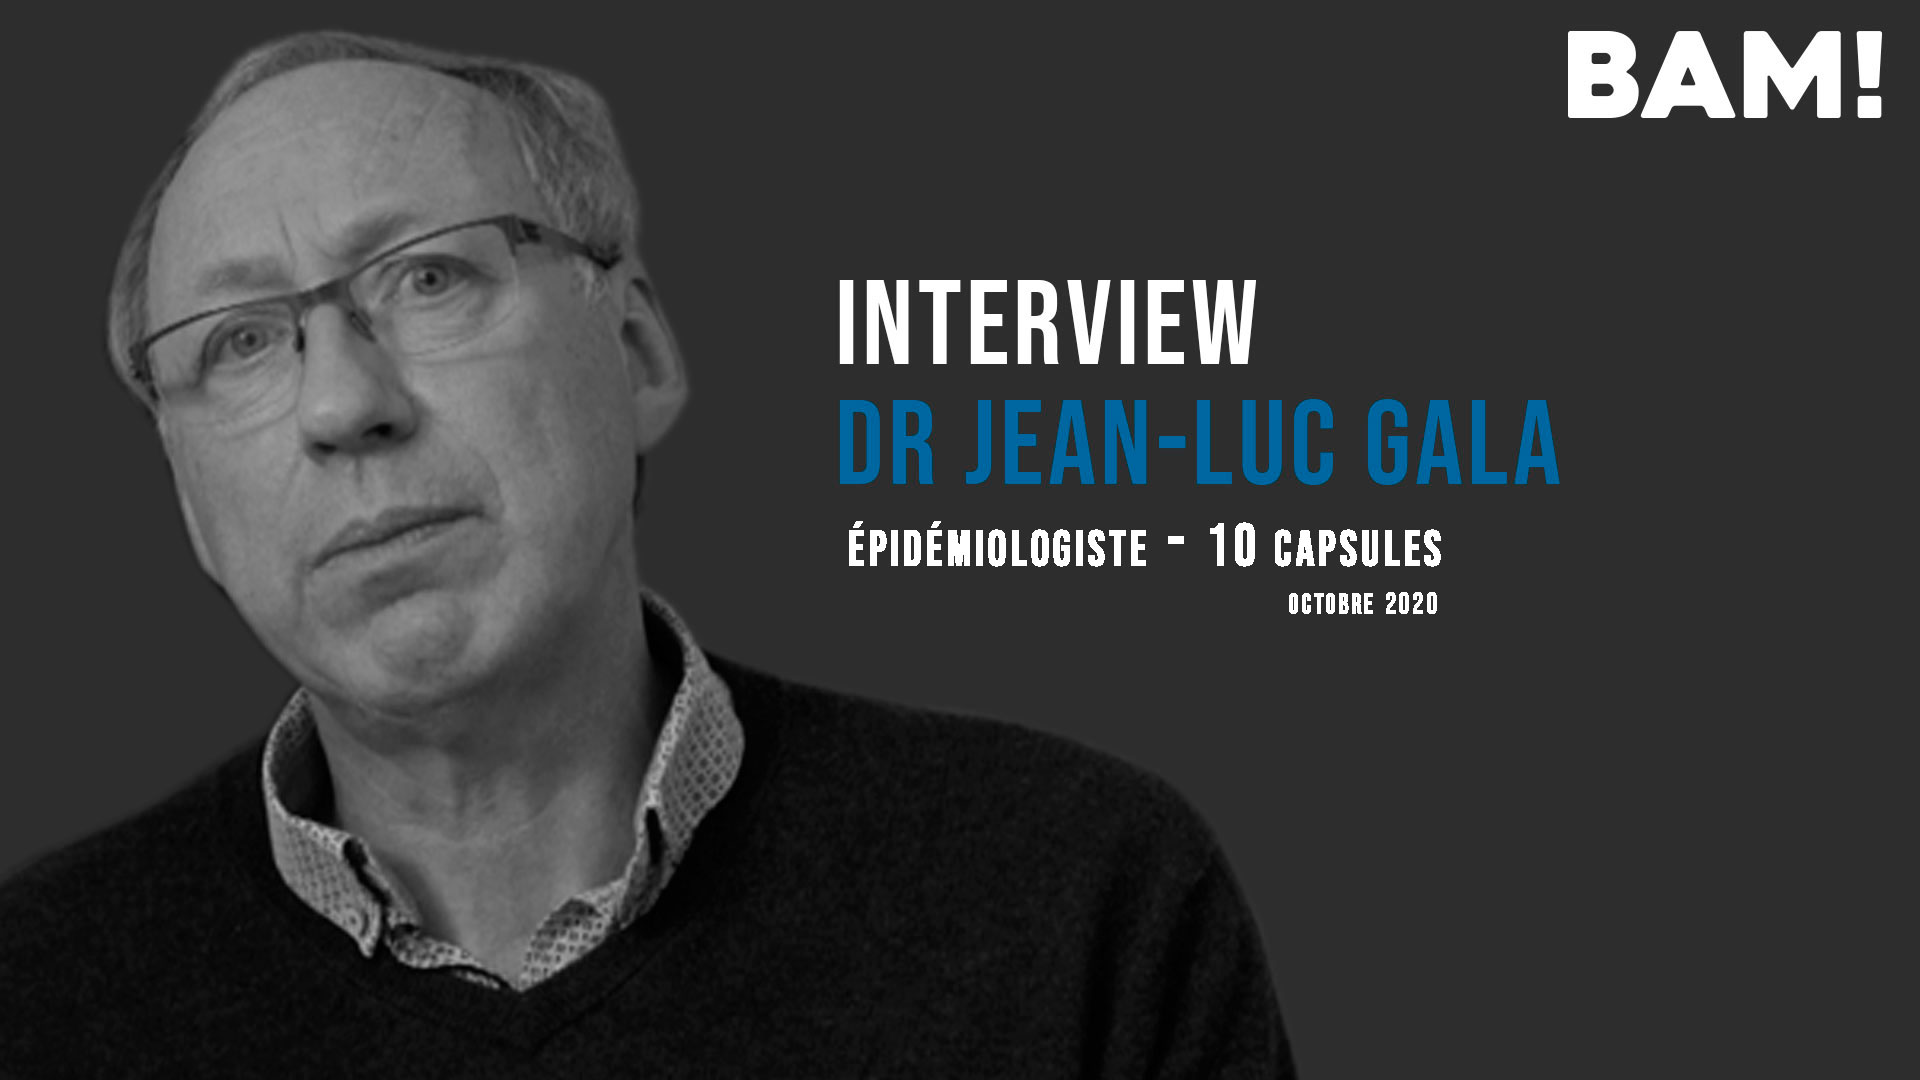 BAM! News - Interview BAM! de Jean-Luc Gala - épidémiologiste